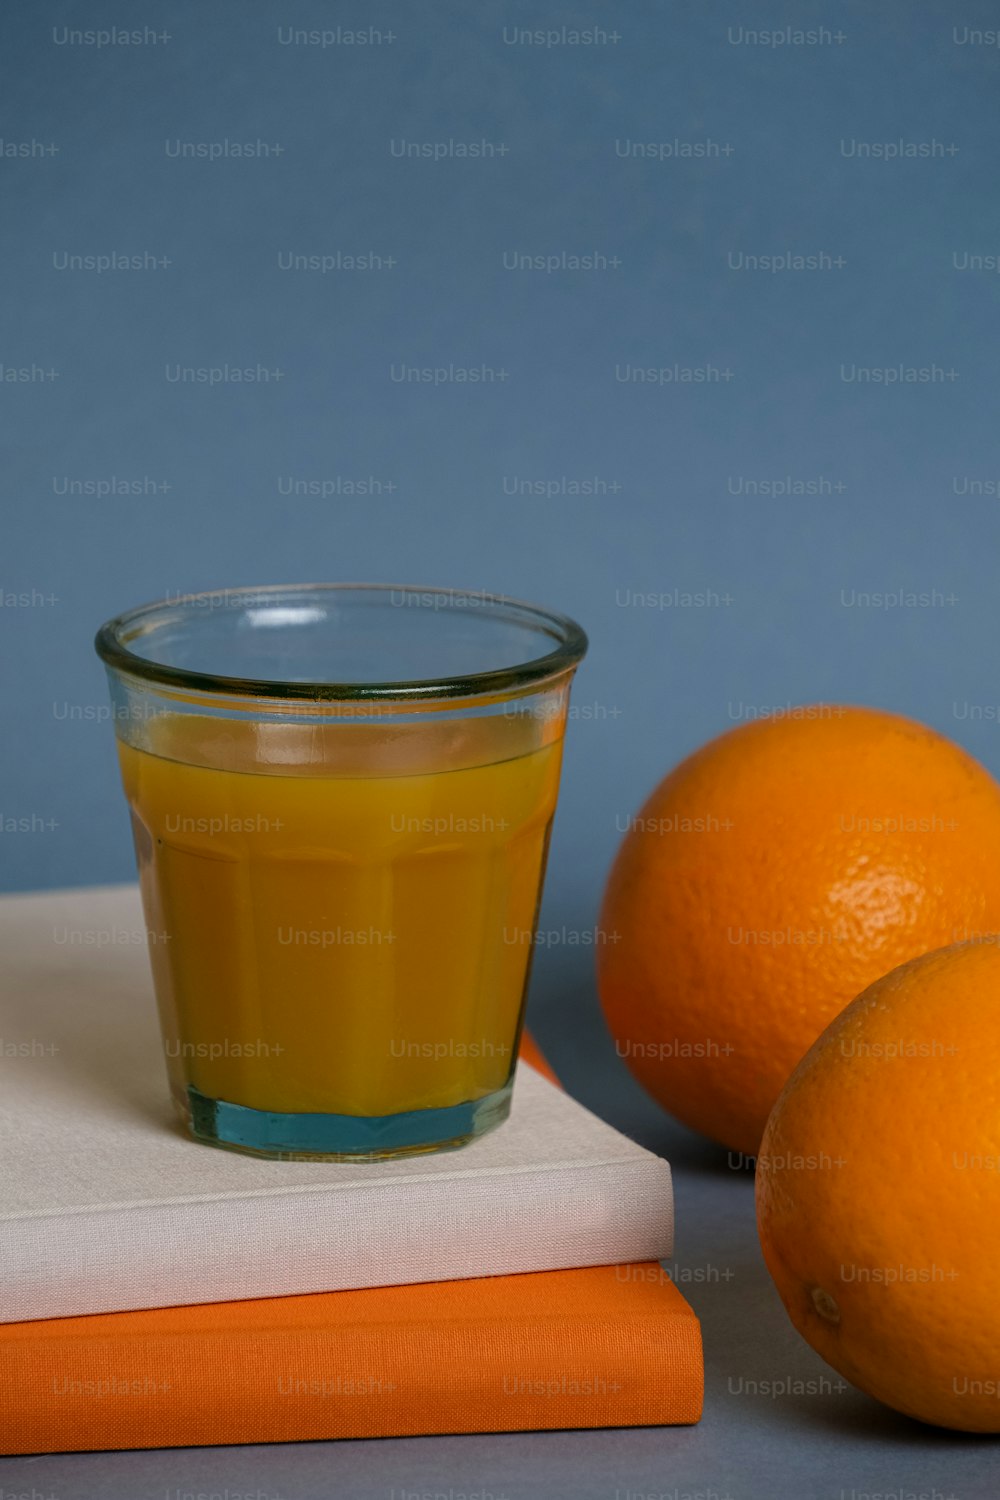 a glass of orange juice next to three oranges